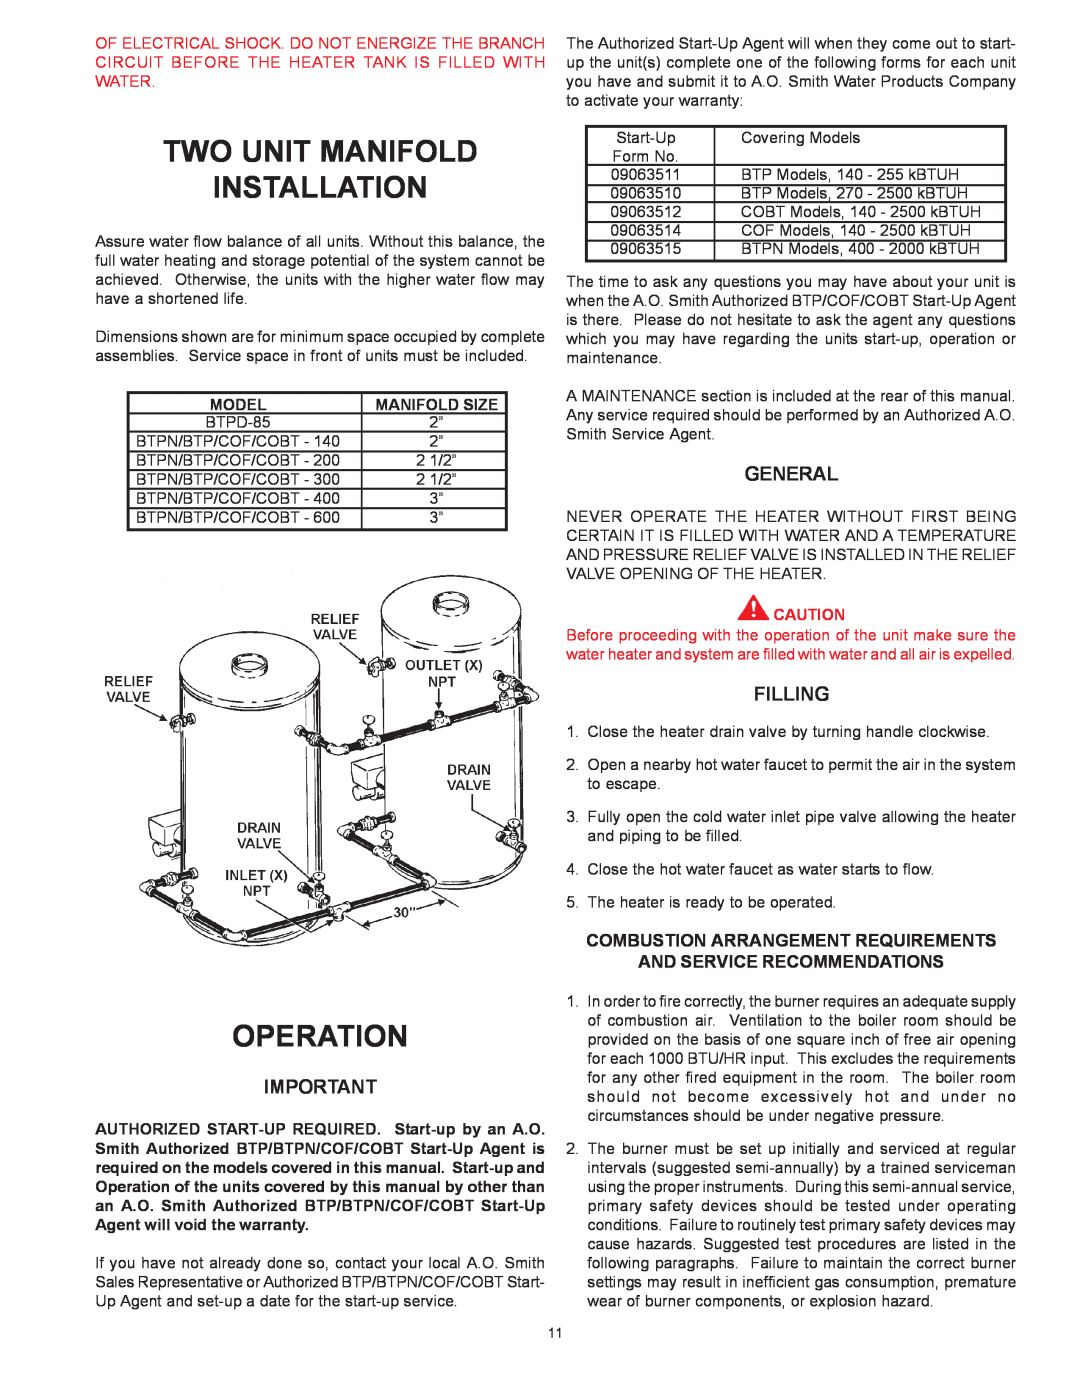 A.O. Smith COBT, COF, BTPN, BTP-140-140 Two Unit Manifold Installation, Operation, General, Filling, Model, Manifold Size 